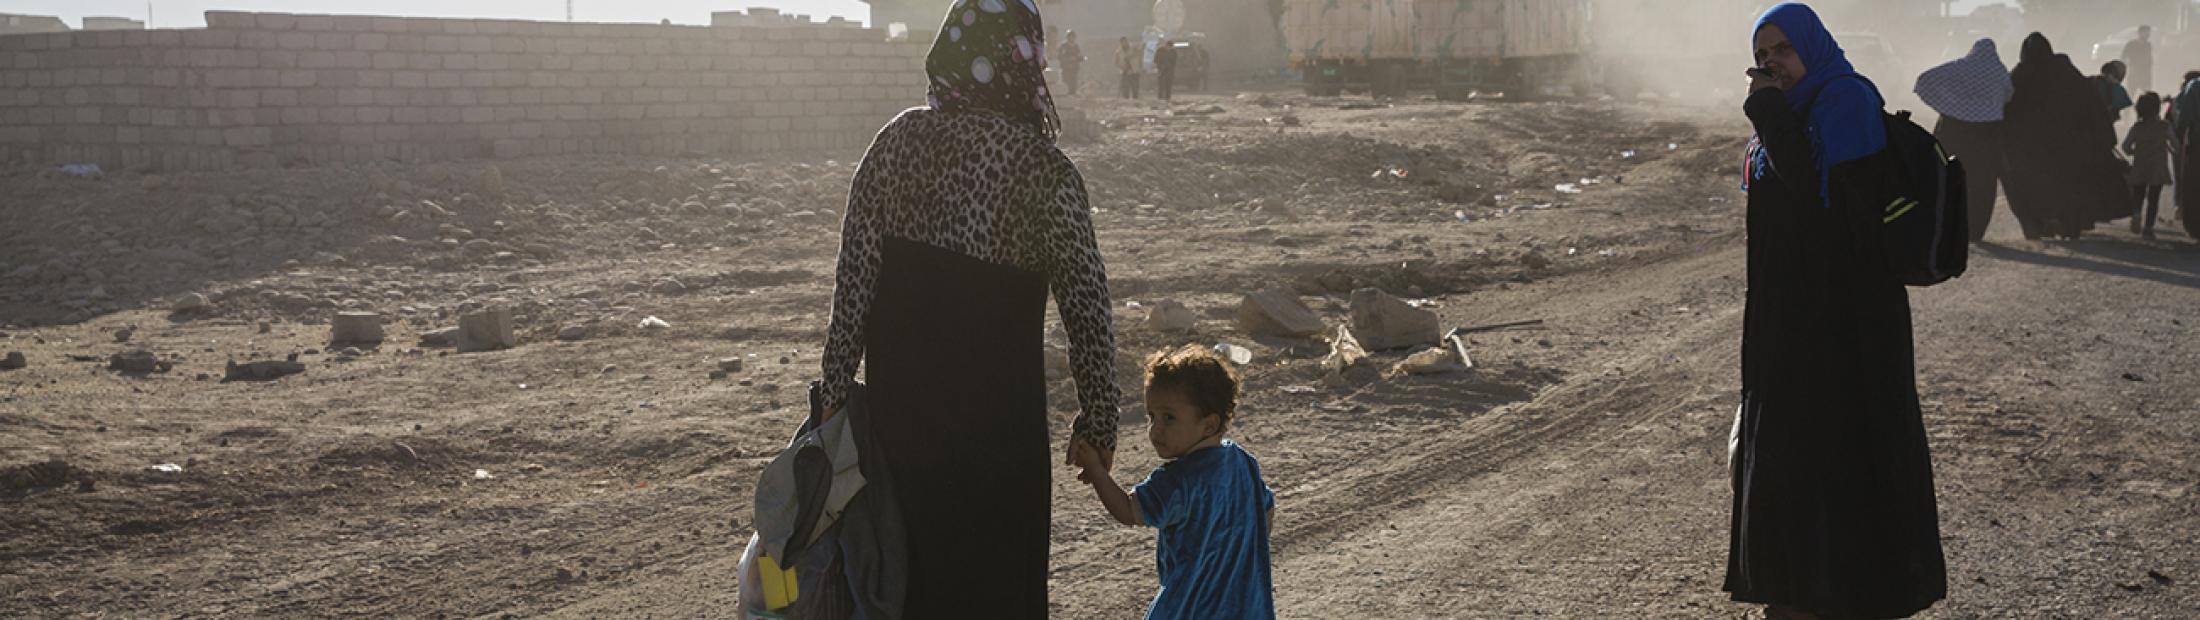 Ofensiva Mosul: 400.000 personas atrapadas sin agua ni comida